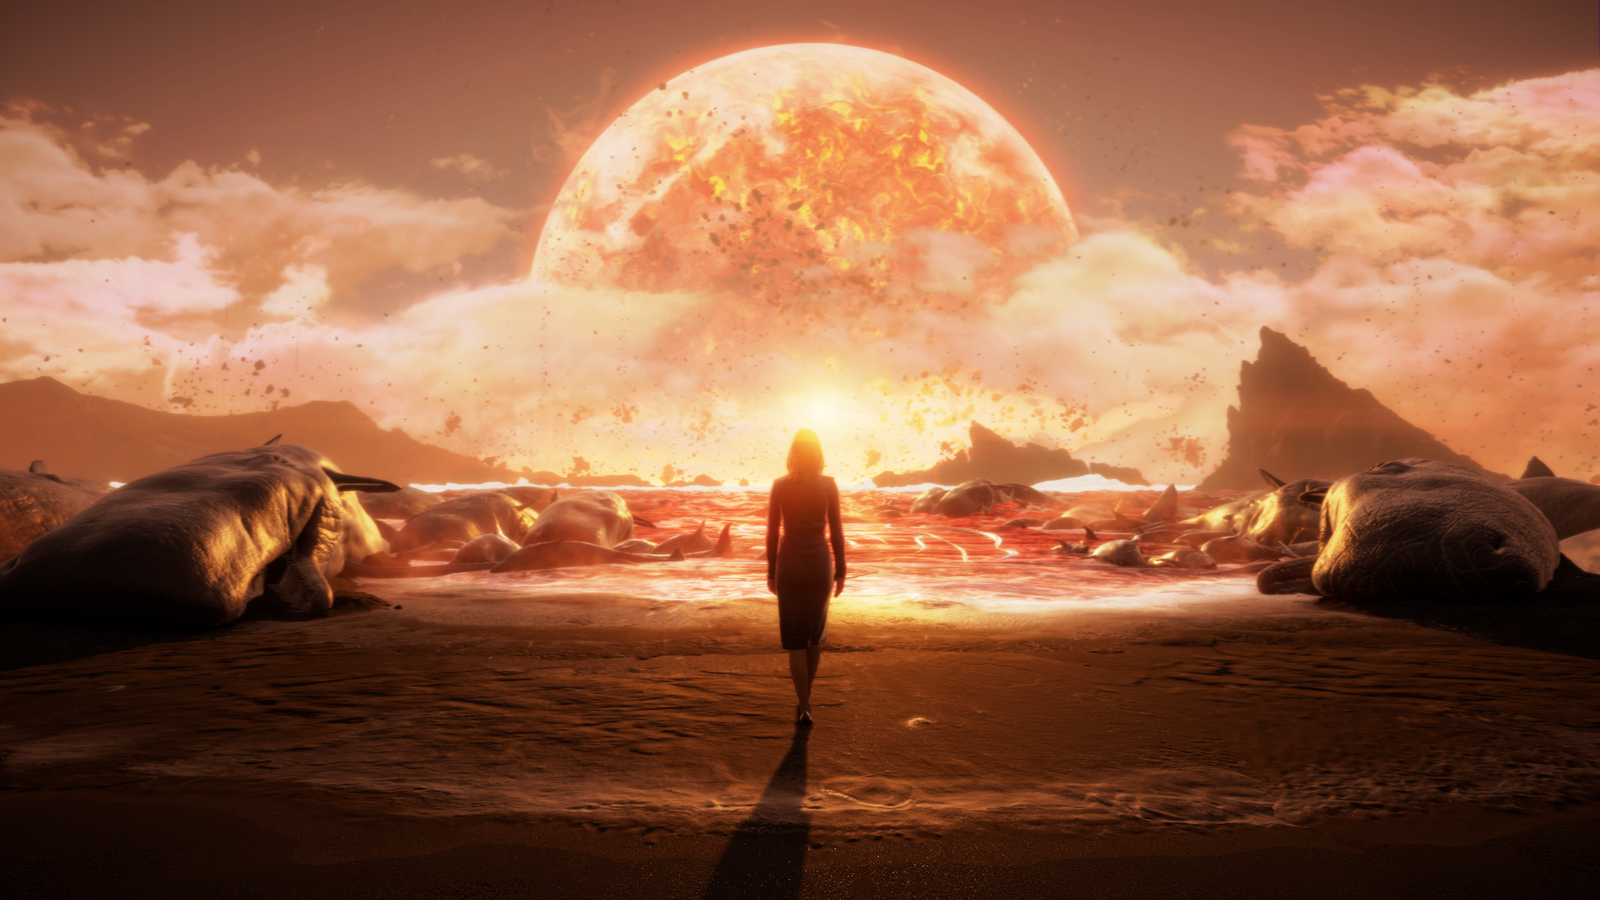 Death Stranding review – Hideo Kojima's radically tough slow-burning epic, Games